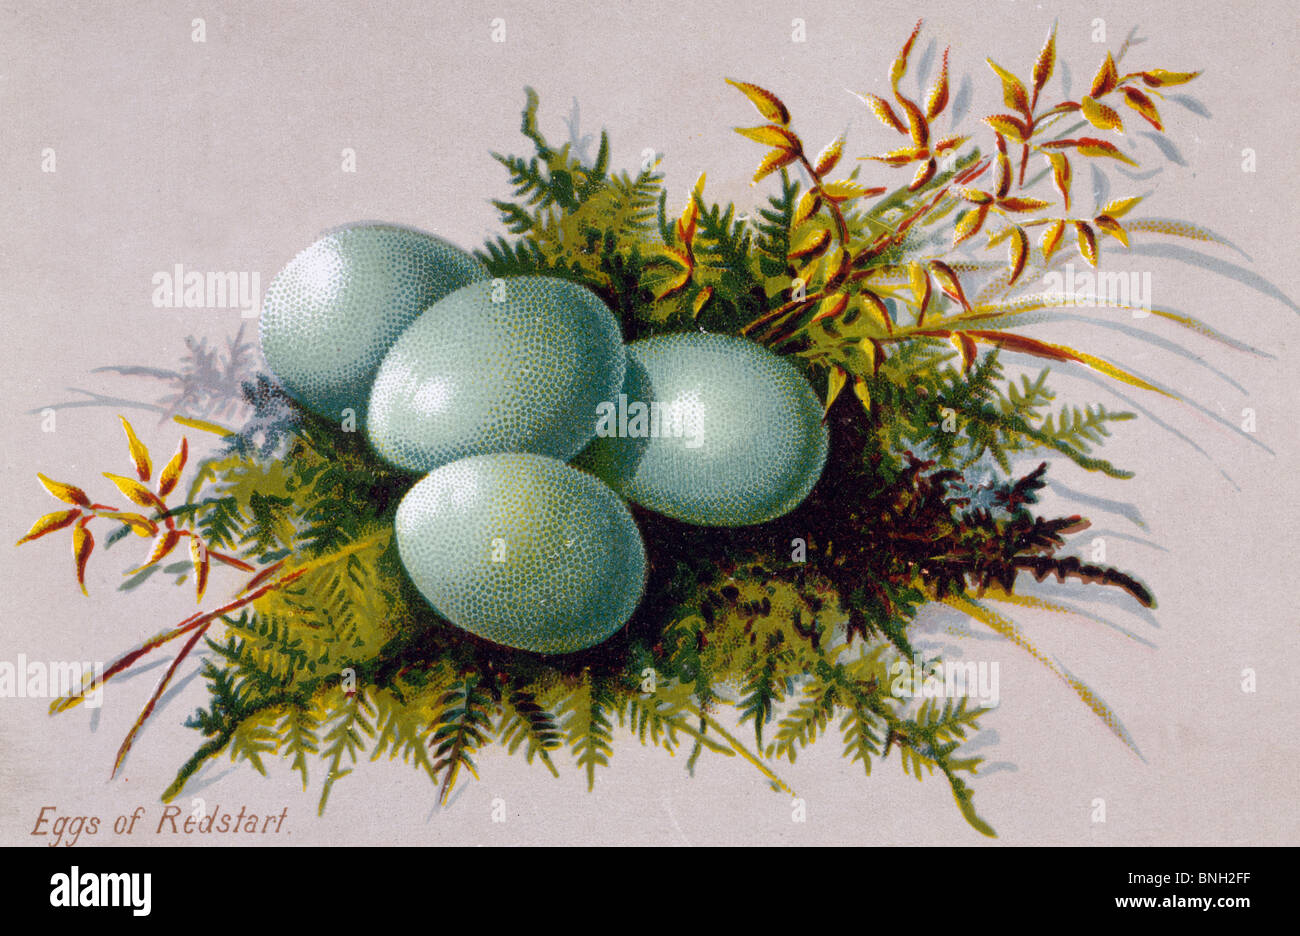 Eggs of Redstart, Nostalgia Cards Stock Photo